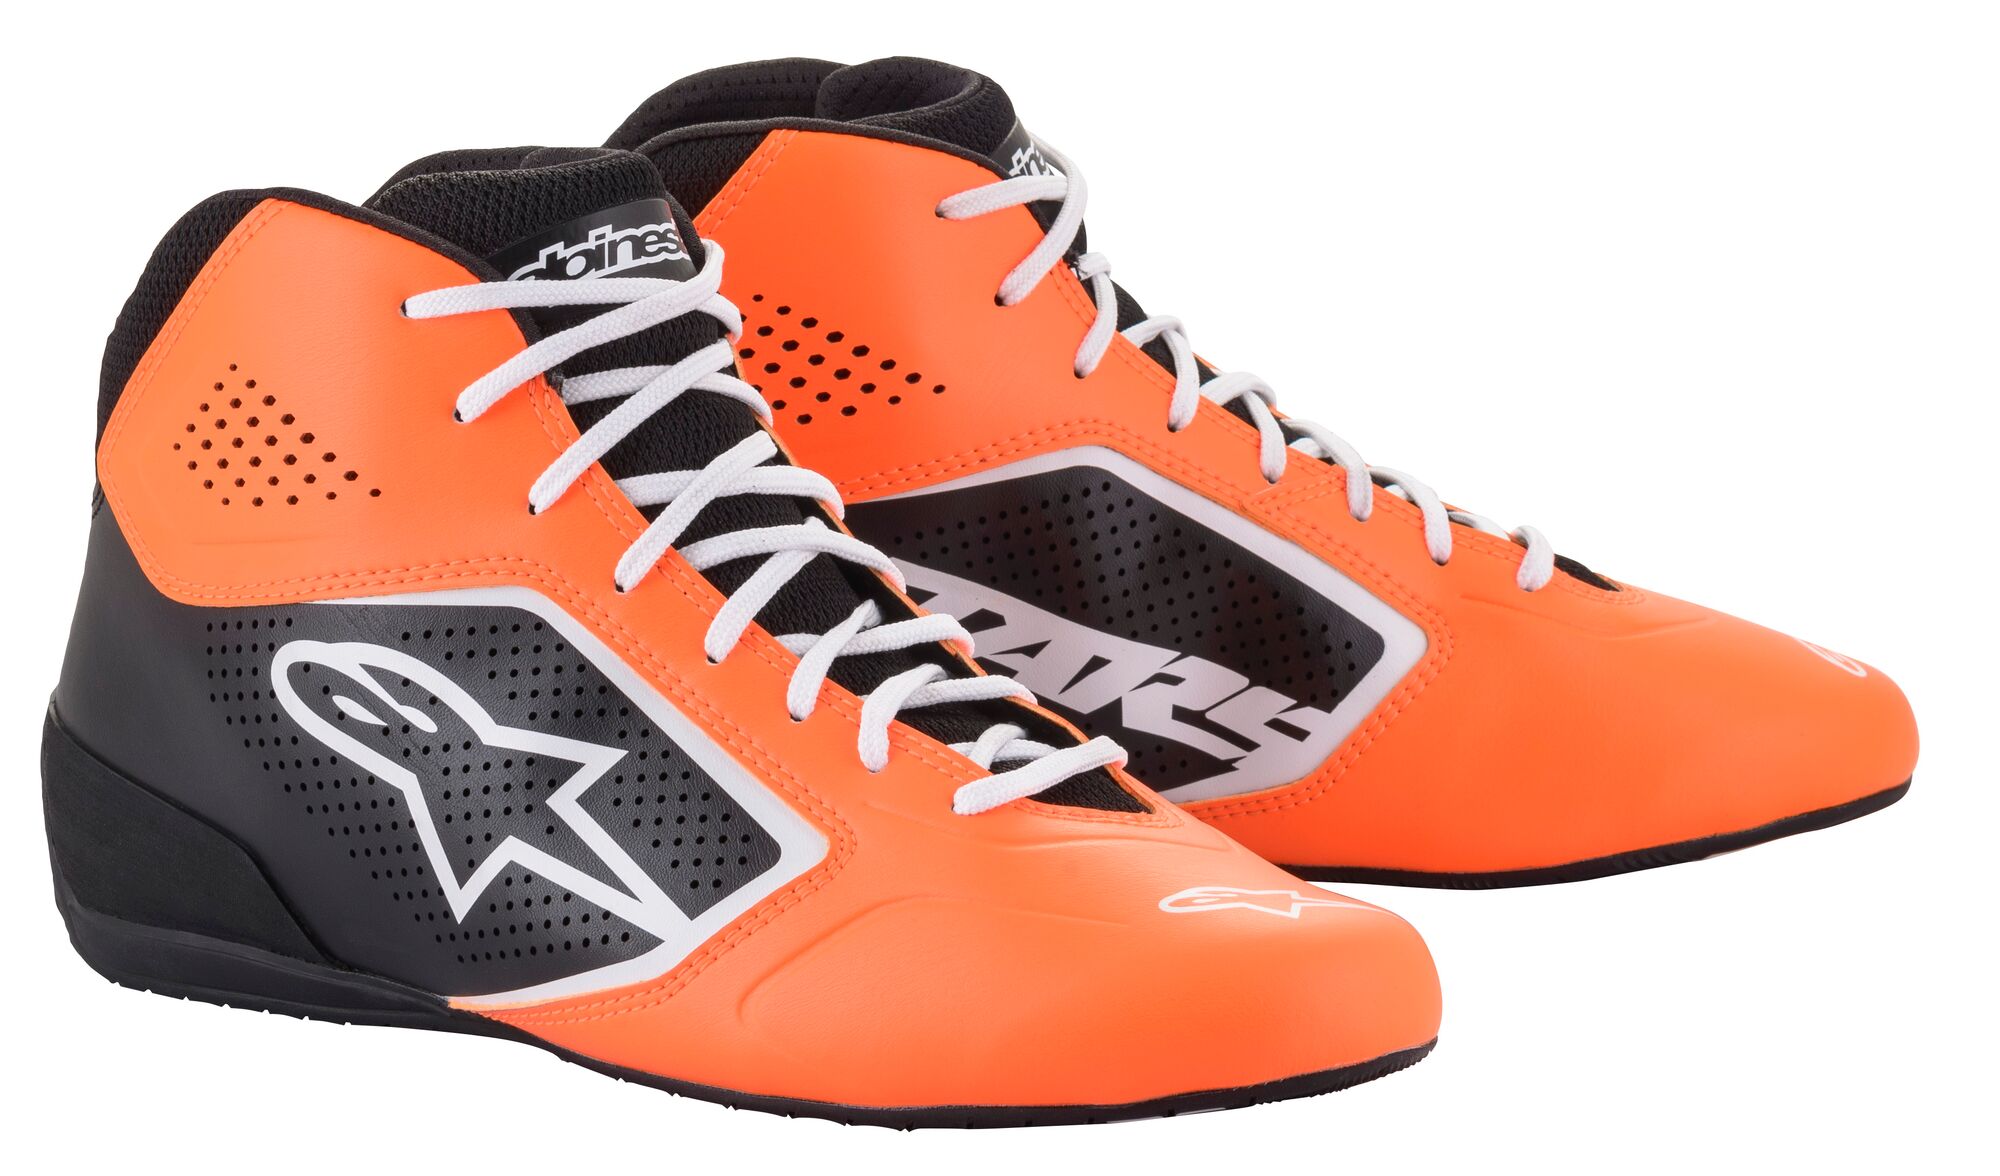 Picture of 2021 Tech-1 K START V2 shoes orange fl/black/white